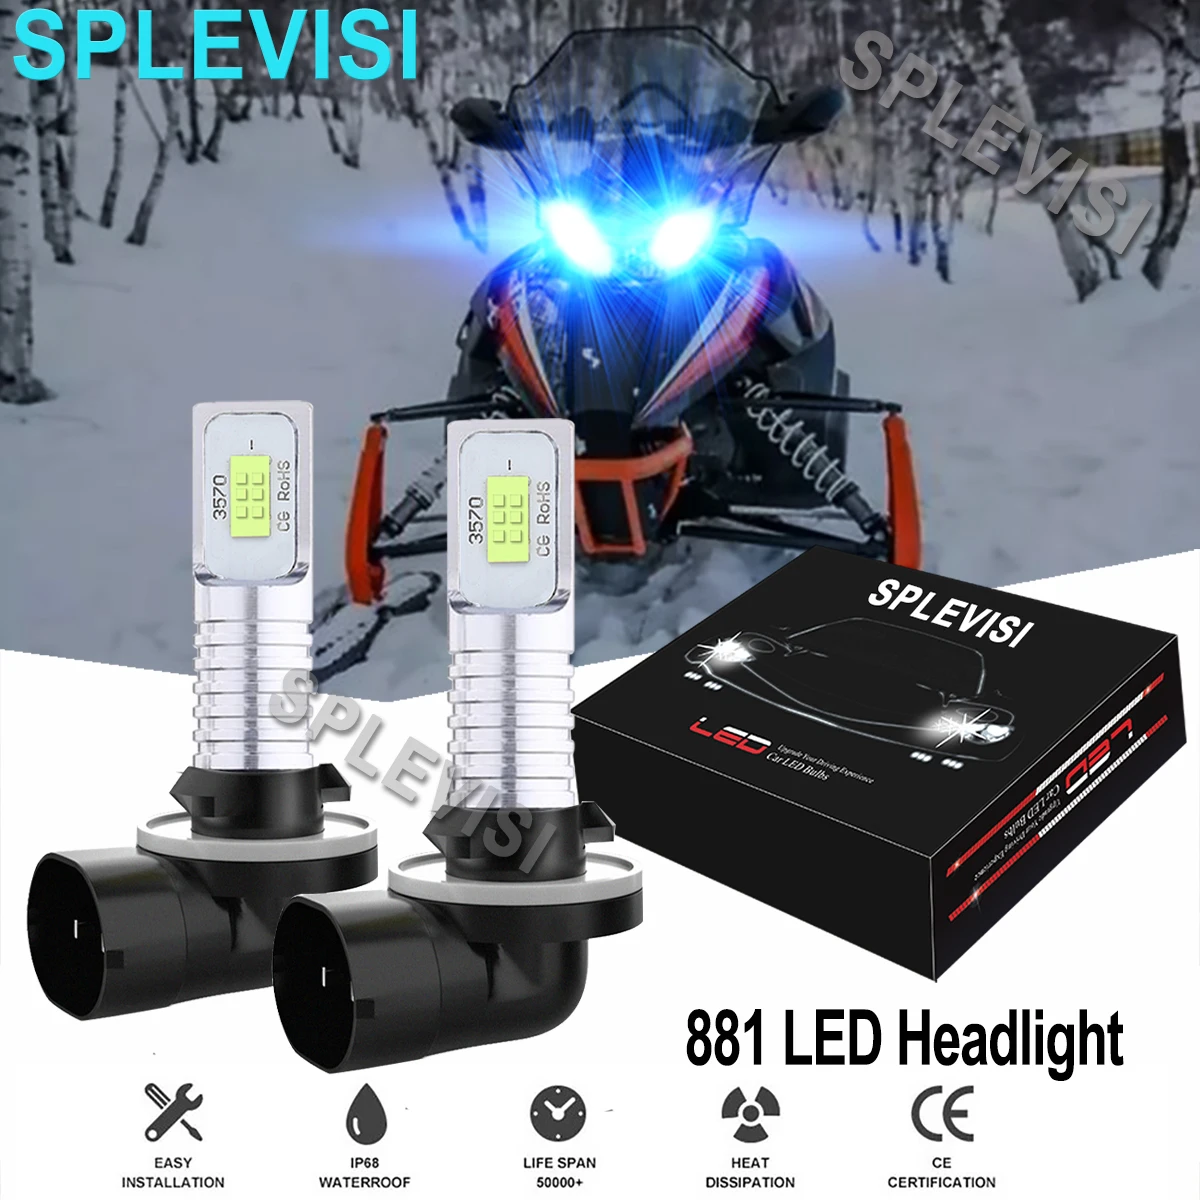 2x 70W 8000K Ice Blue LED Headlights Bulbs Kit For Arctic Cat Snowmobiles Crossfire 500 600 700 800